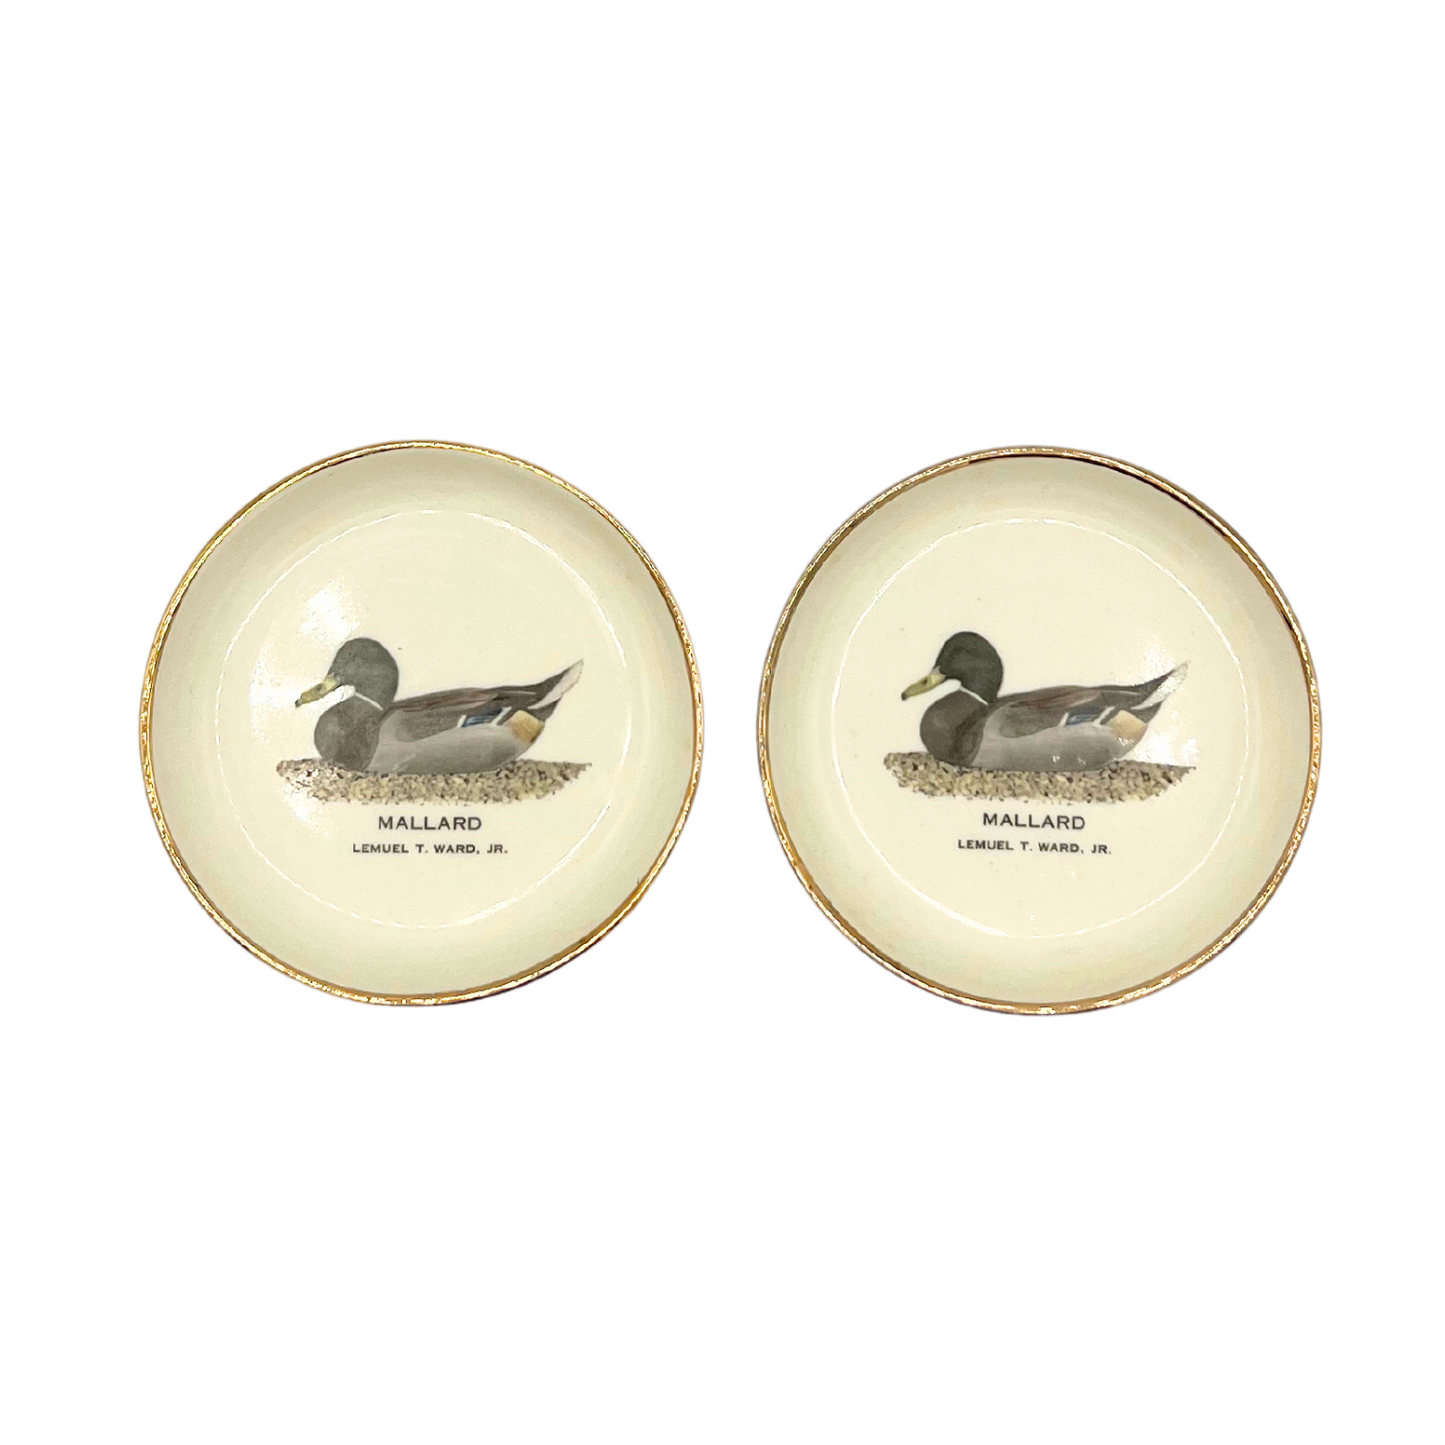 pair of 1984 Ducks Unlimited mallard duck coasters